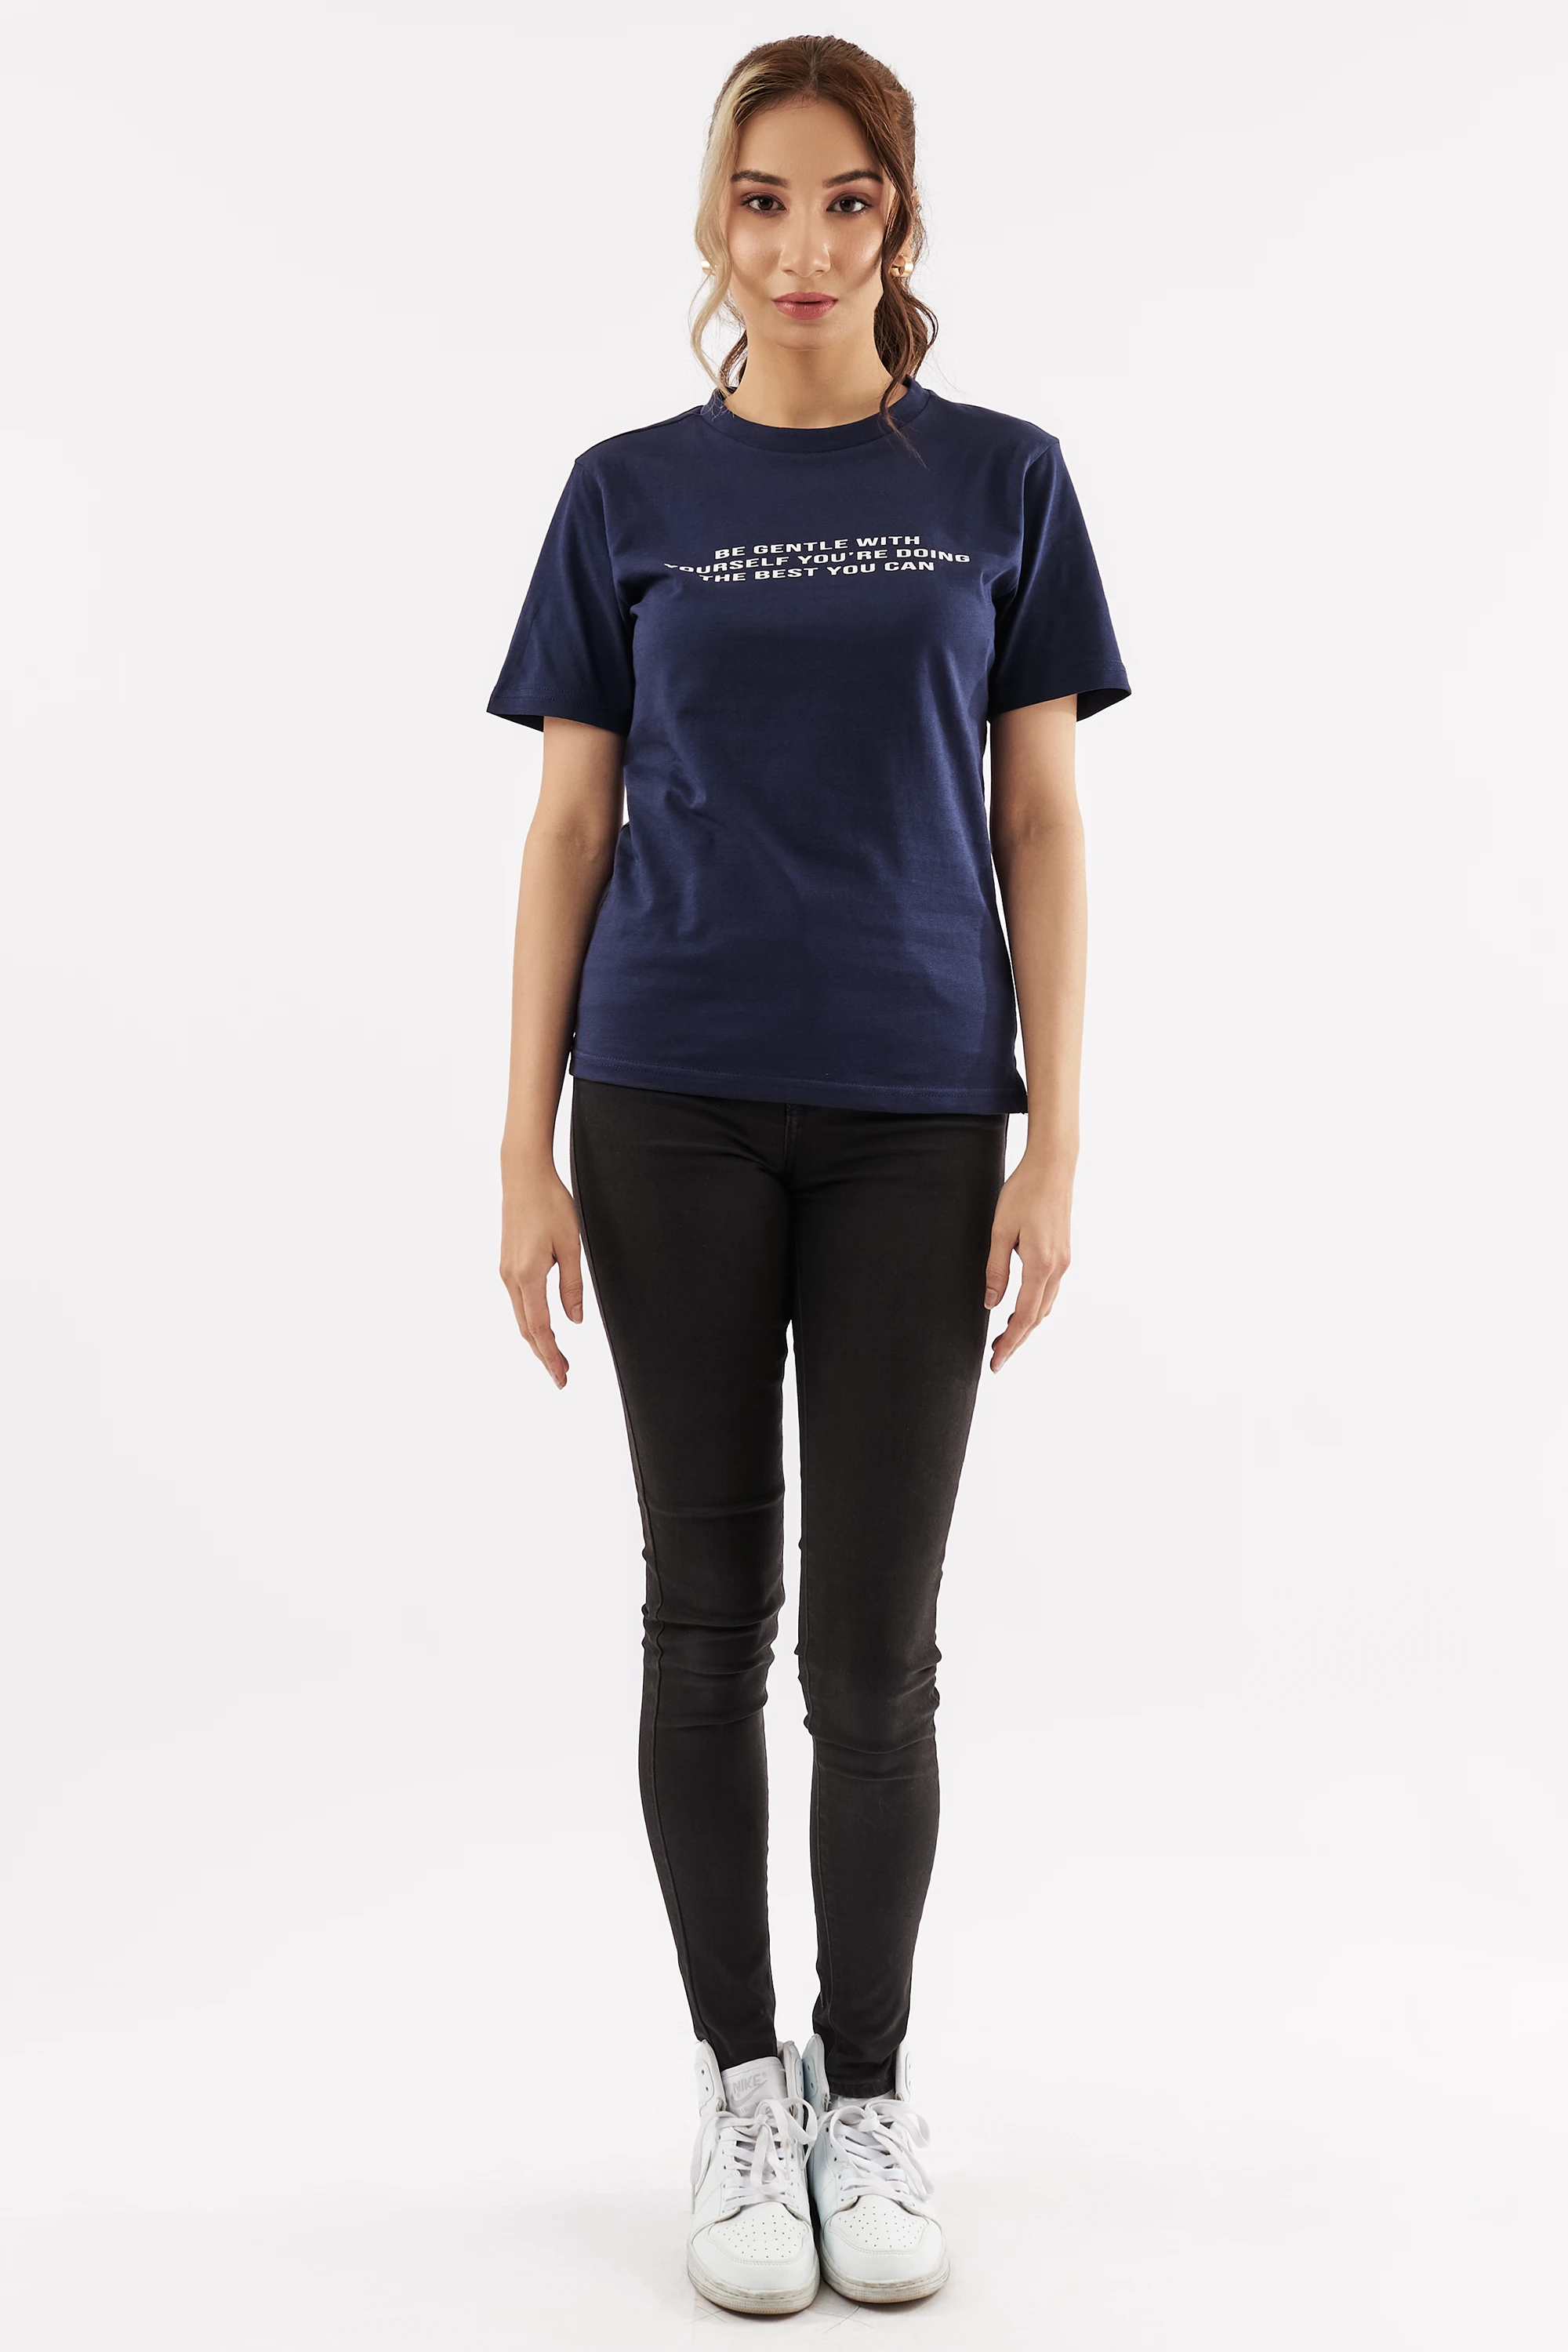 Women's Self-Compassion Graphic T-Shirt Blue